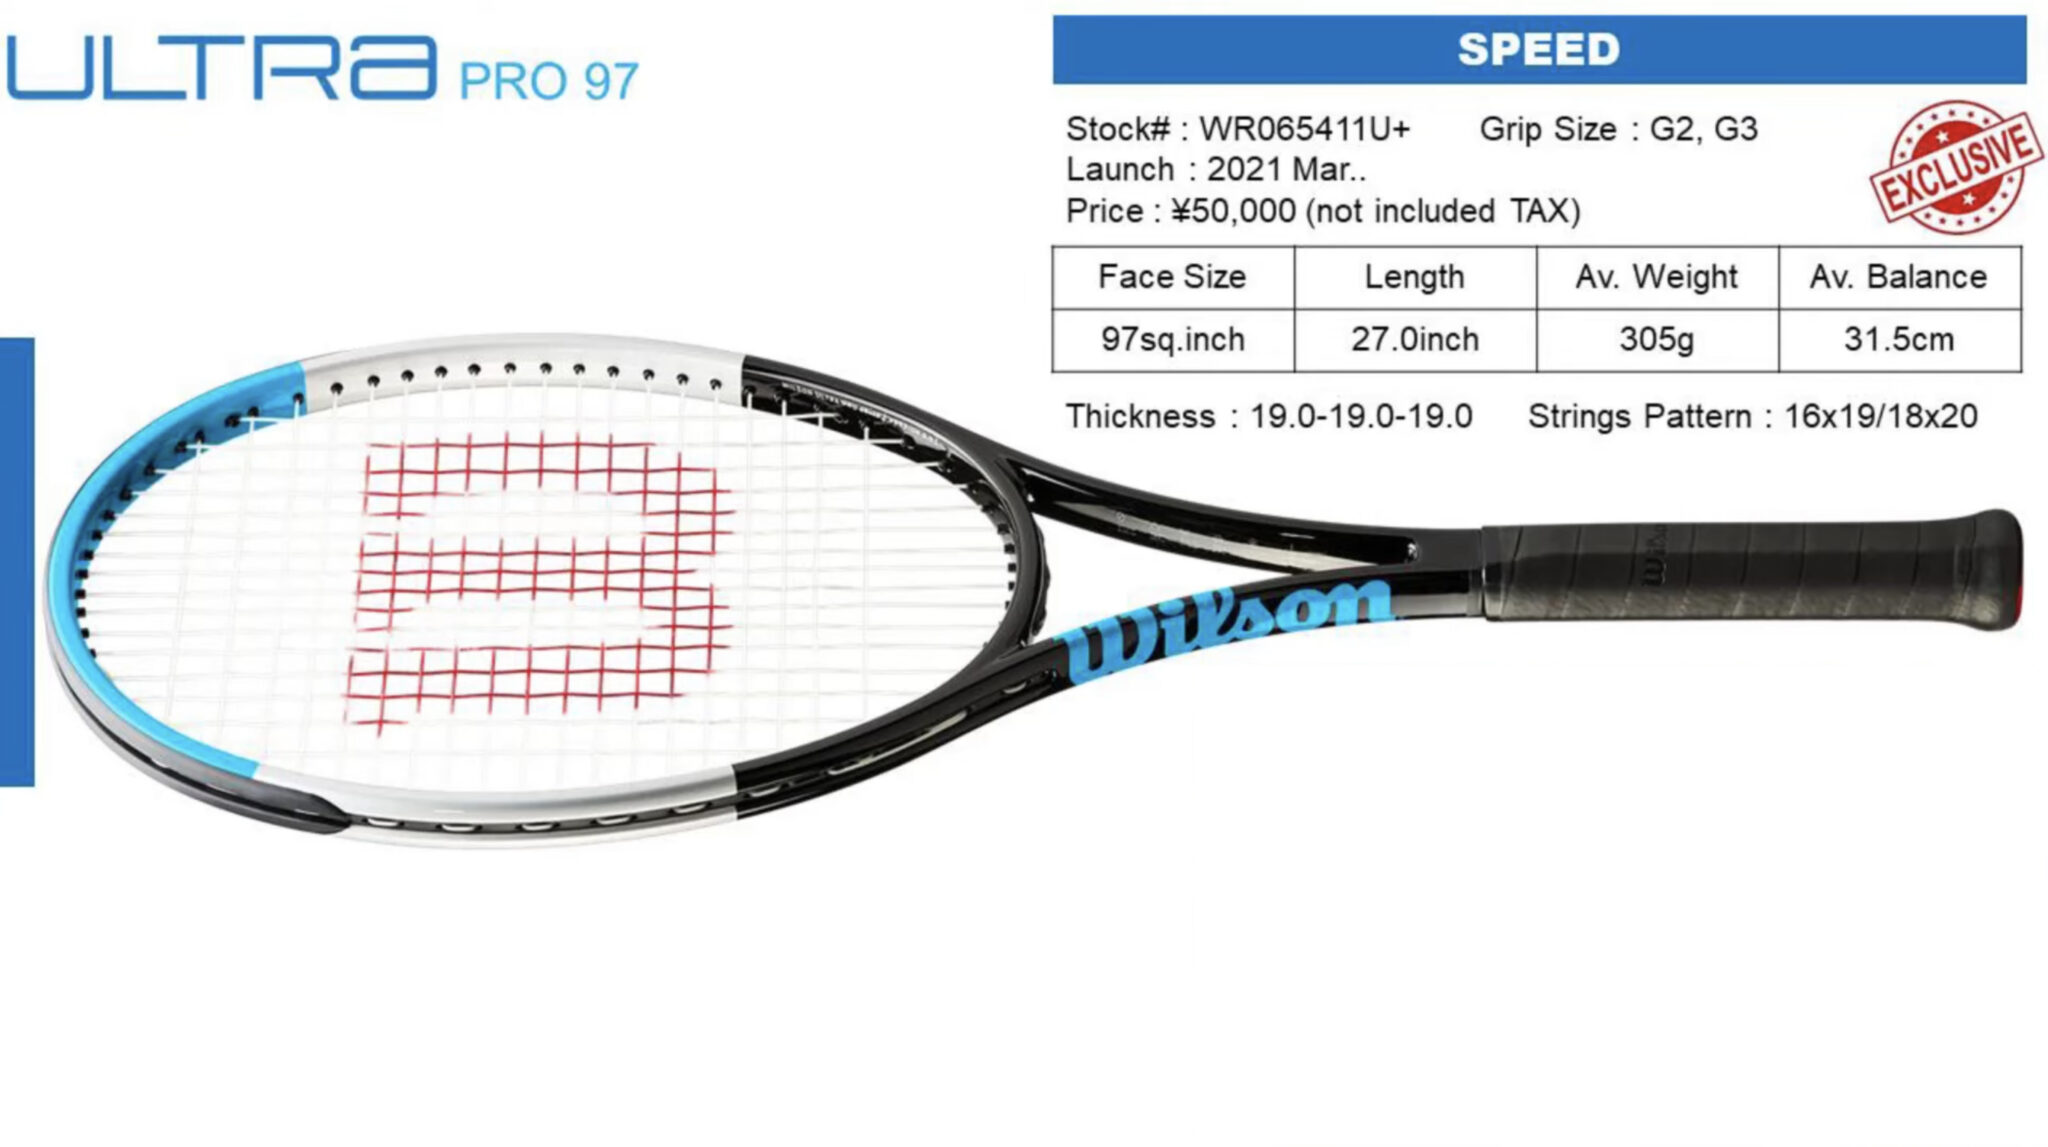 ULTRA 100 V3.0 G3 テニスラケット - ラケット(硬式用)